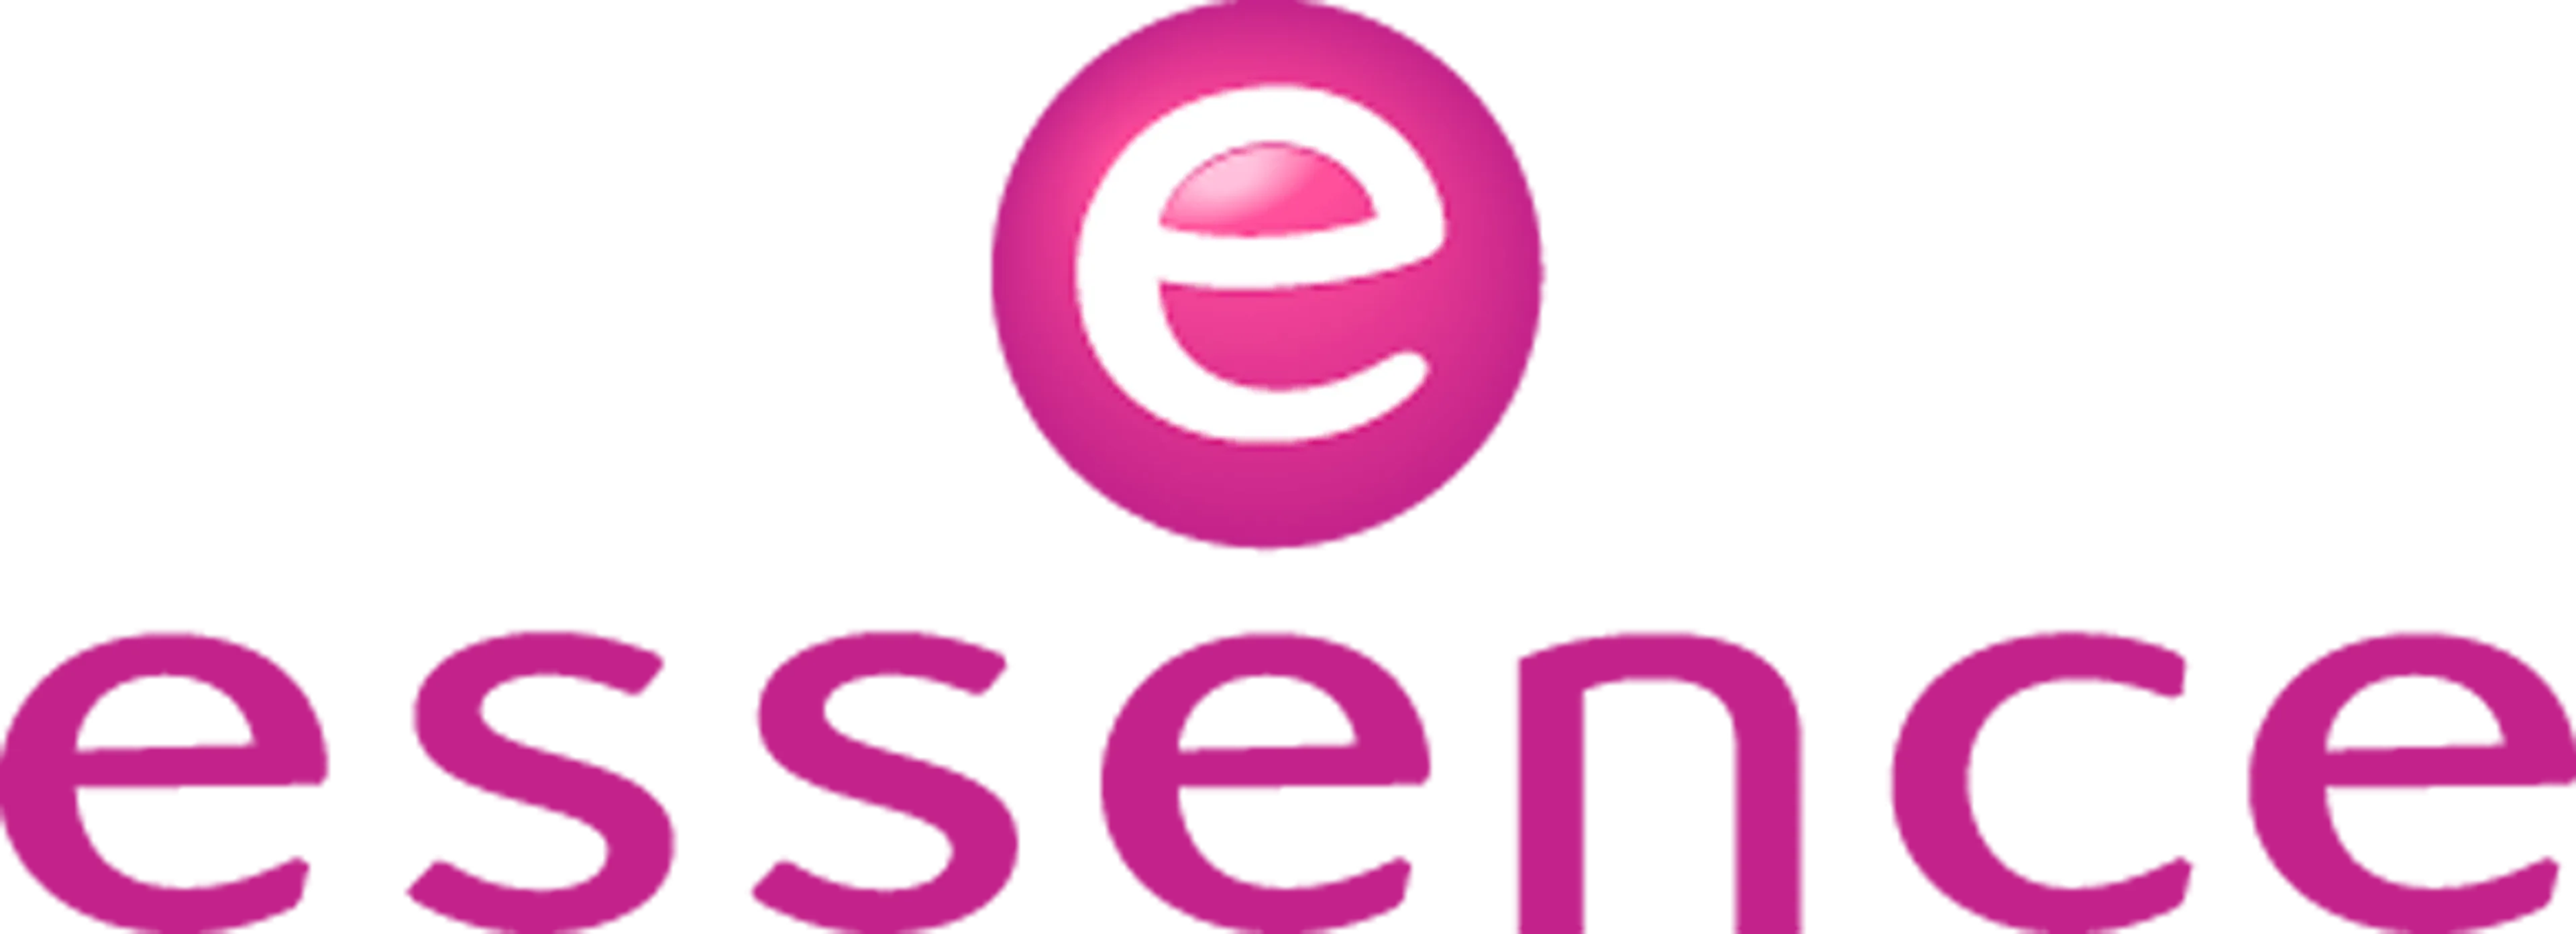 ESSENCE logo